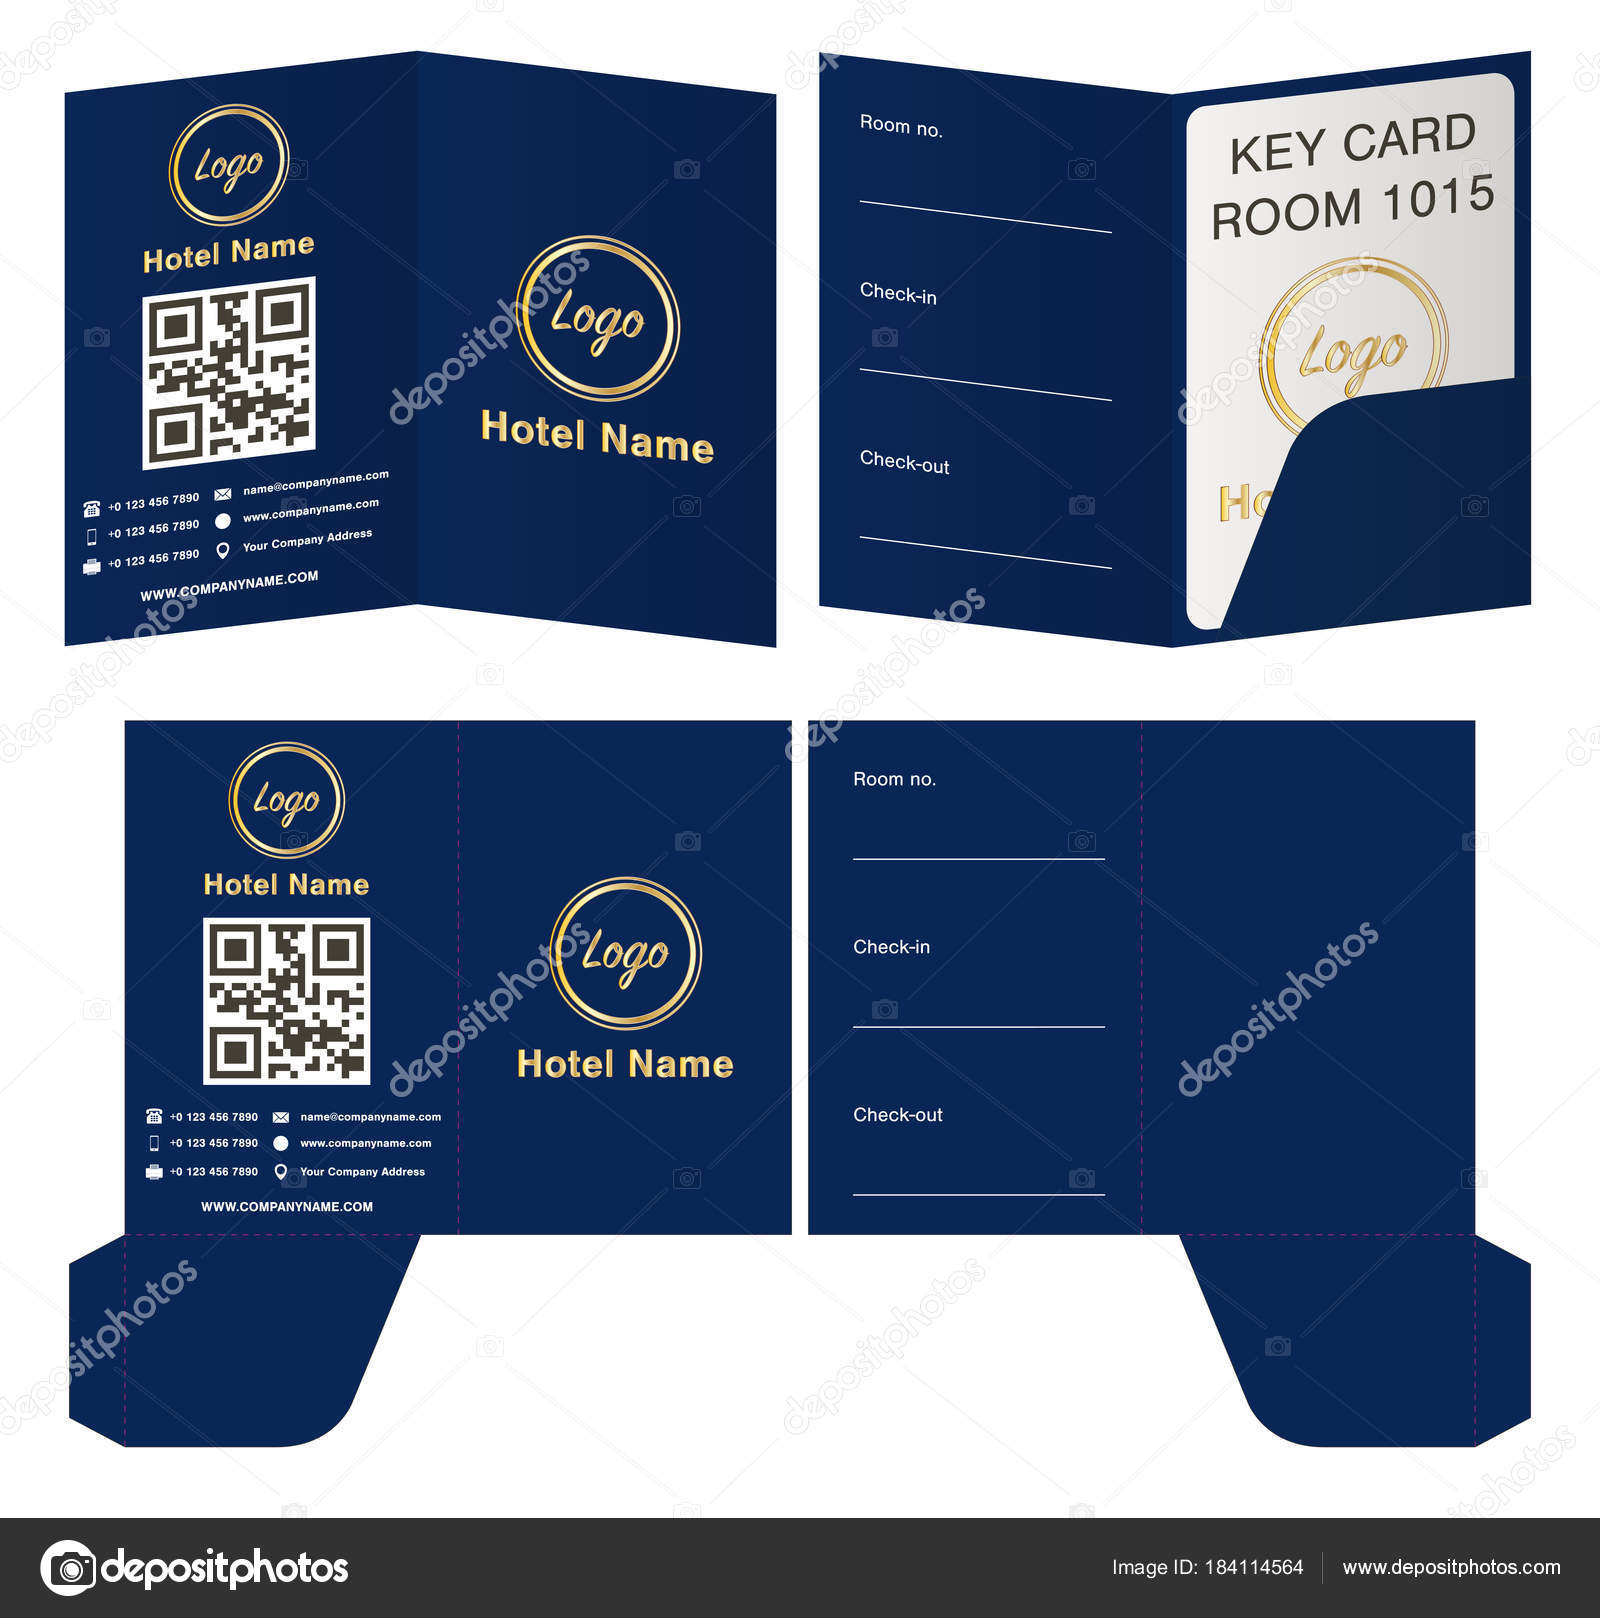 Key Card Holder Template | Hotel Key Card Holder Folder Inside Hotel Key Card Template